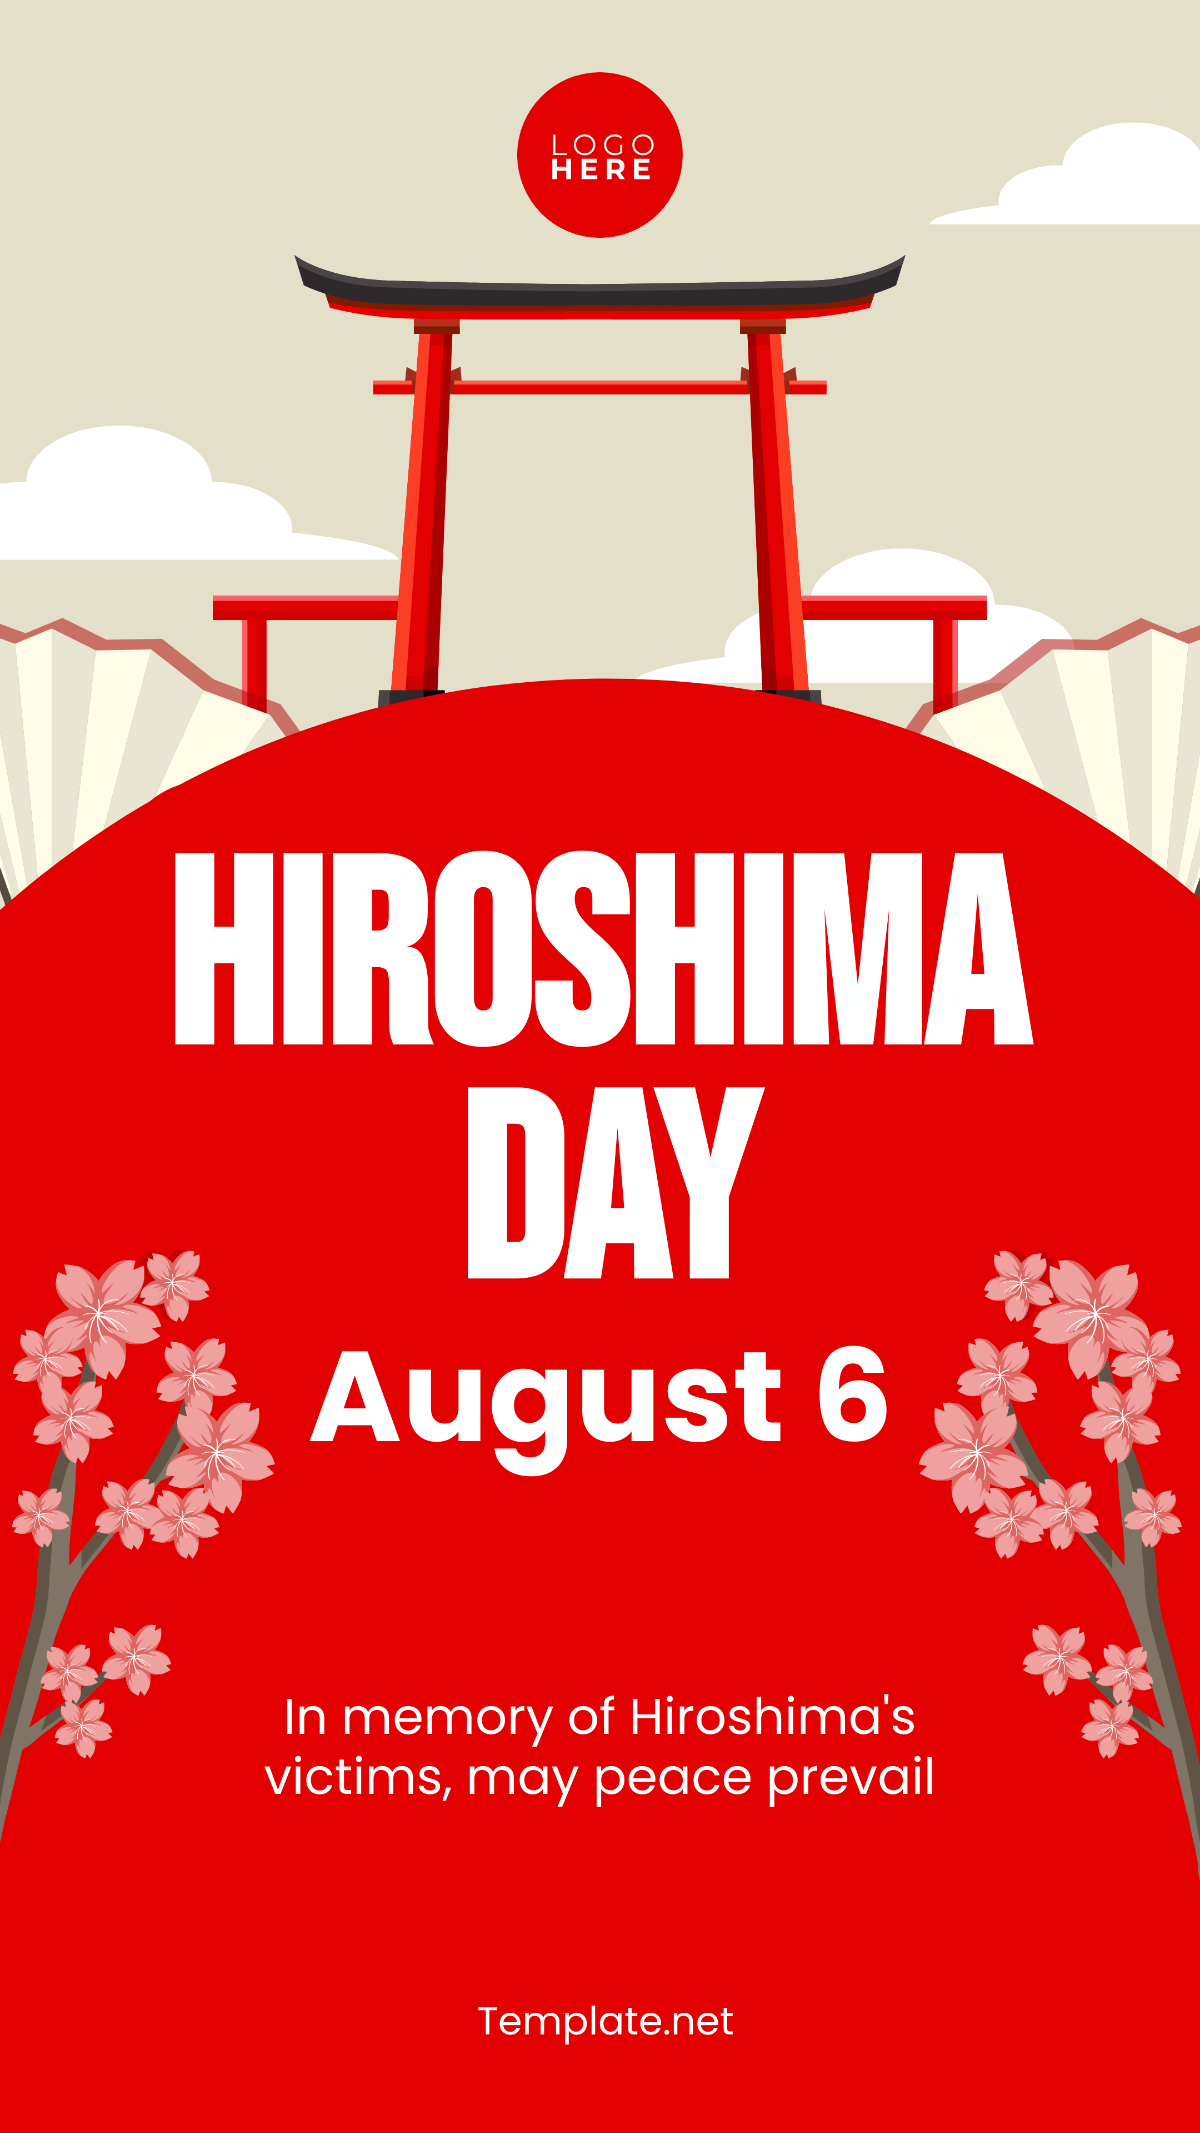 Hiroshima Day Facebook Story